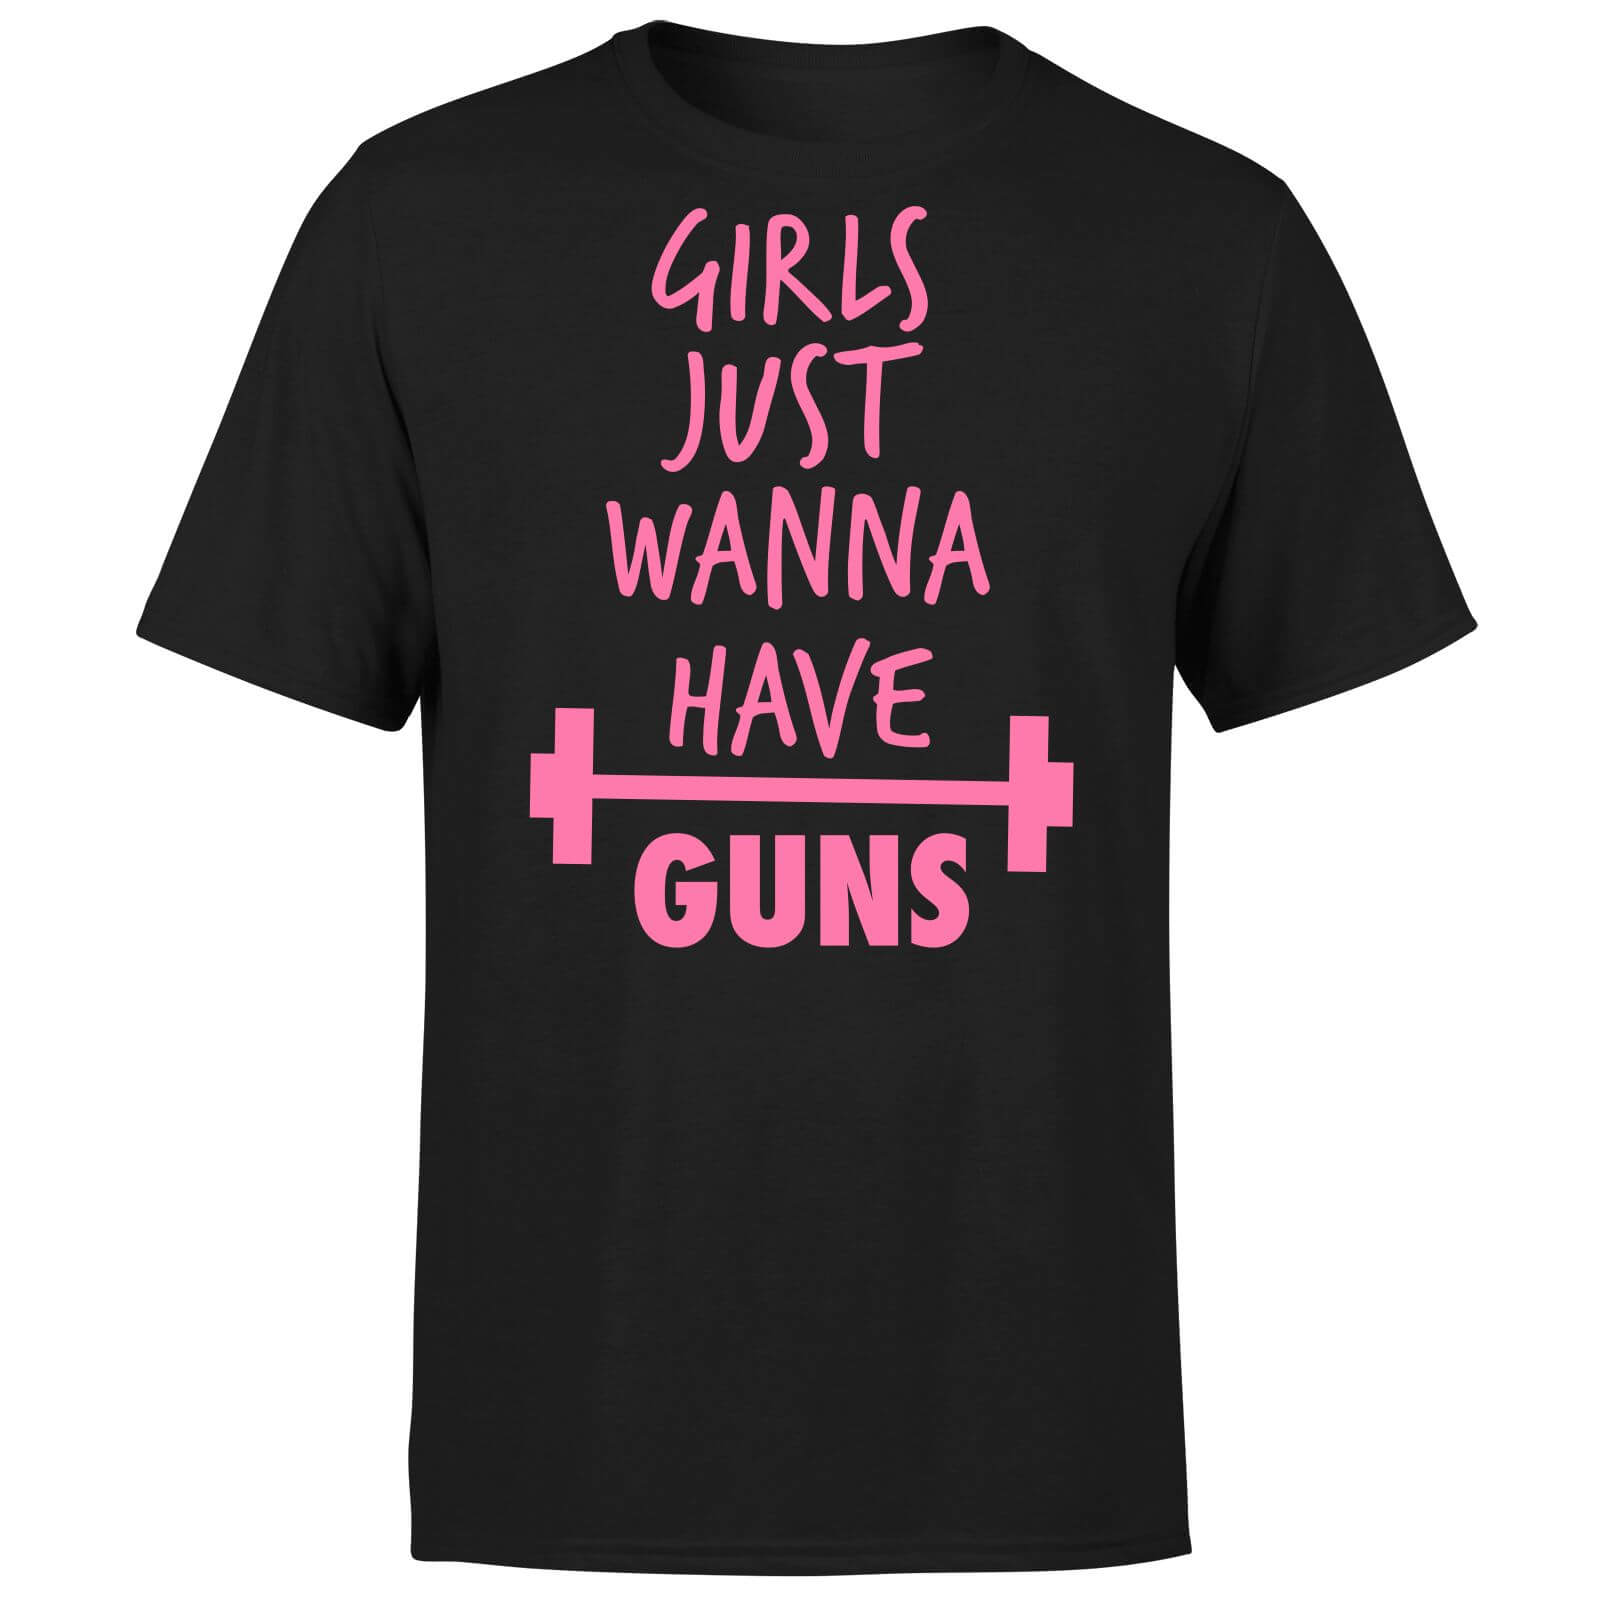 Girls Just Wanna have Guns T-Shirt - Black - S - Black